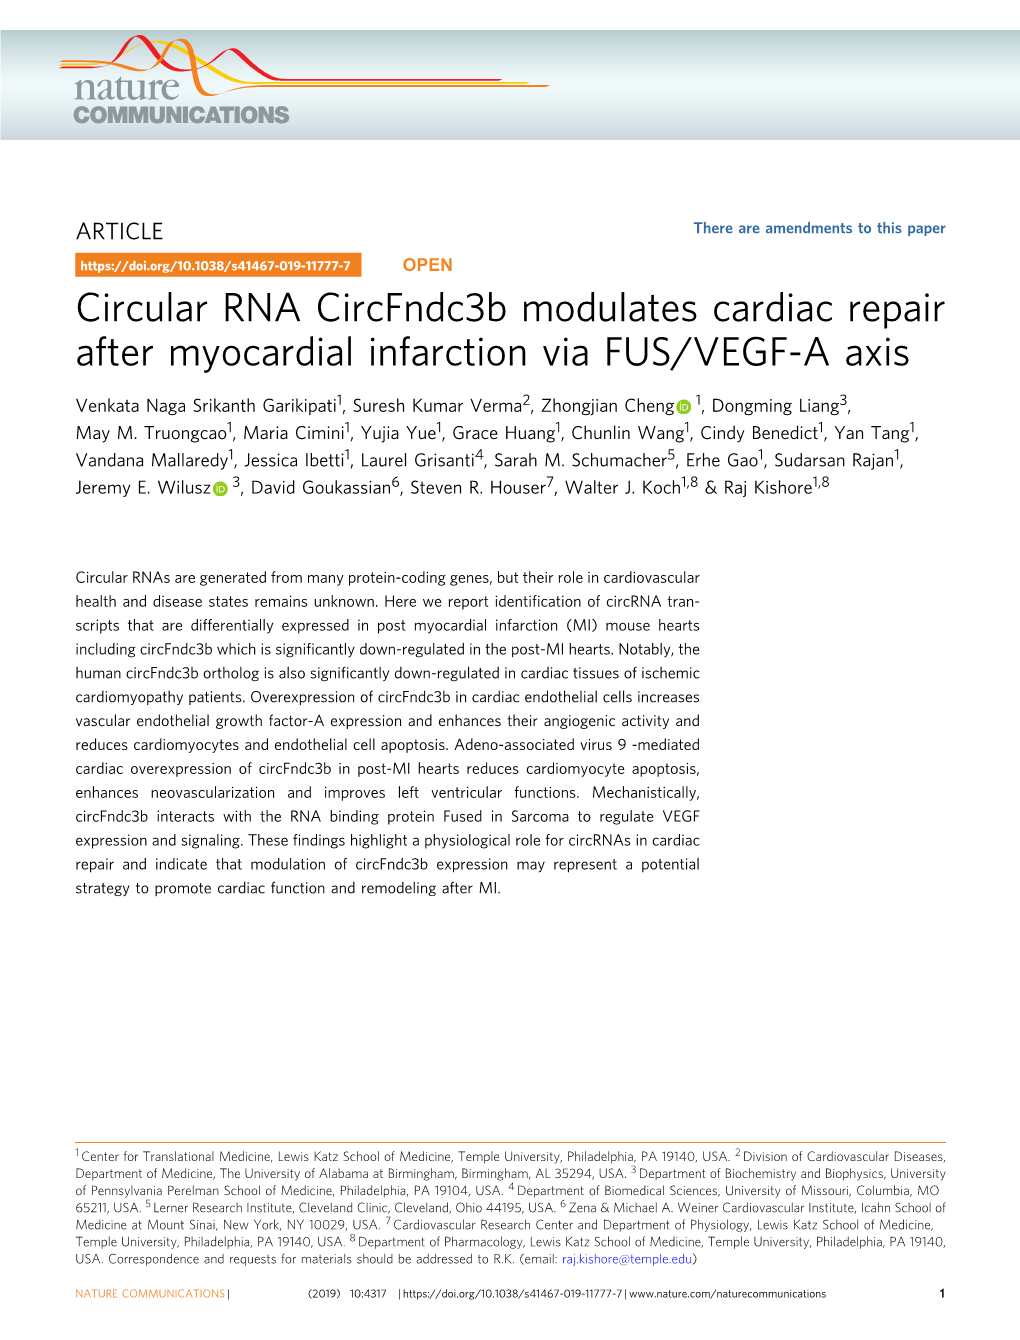 Circular RNA Circfndc3b Modulates Cardiac Repair After Myocardial Infarction Via FUS/VEGF-A Axis